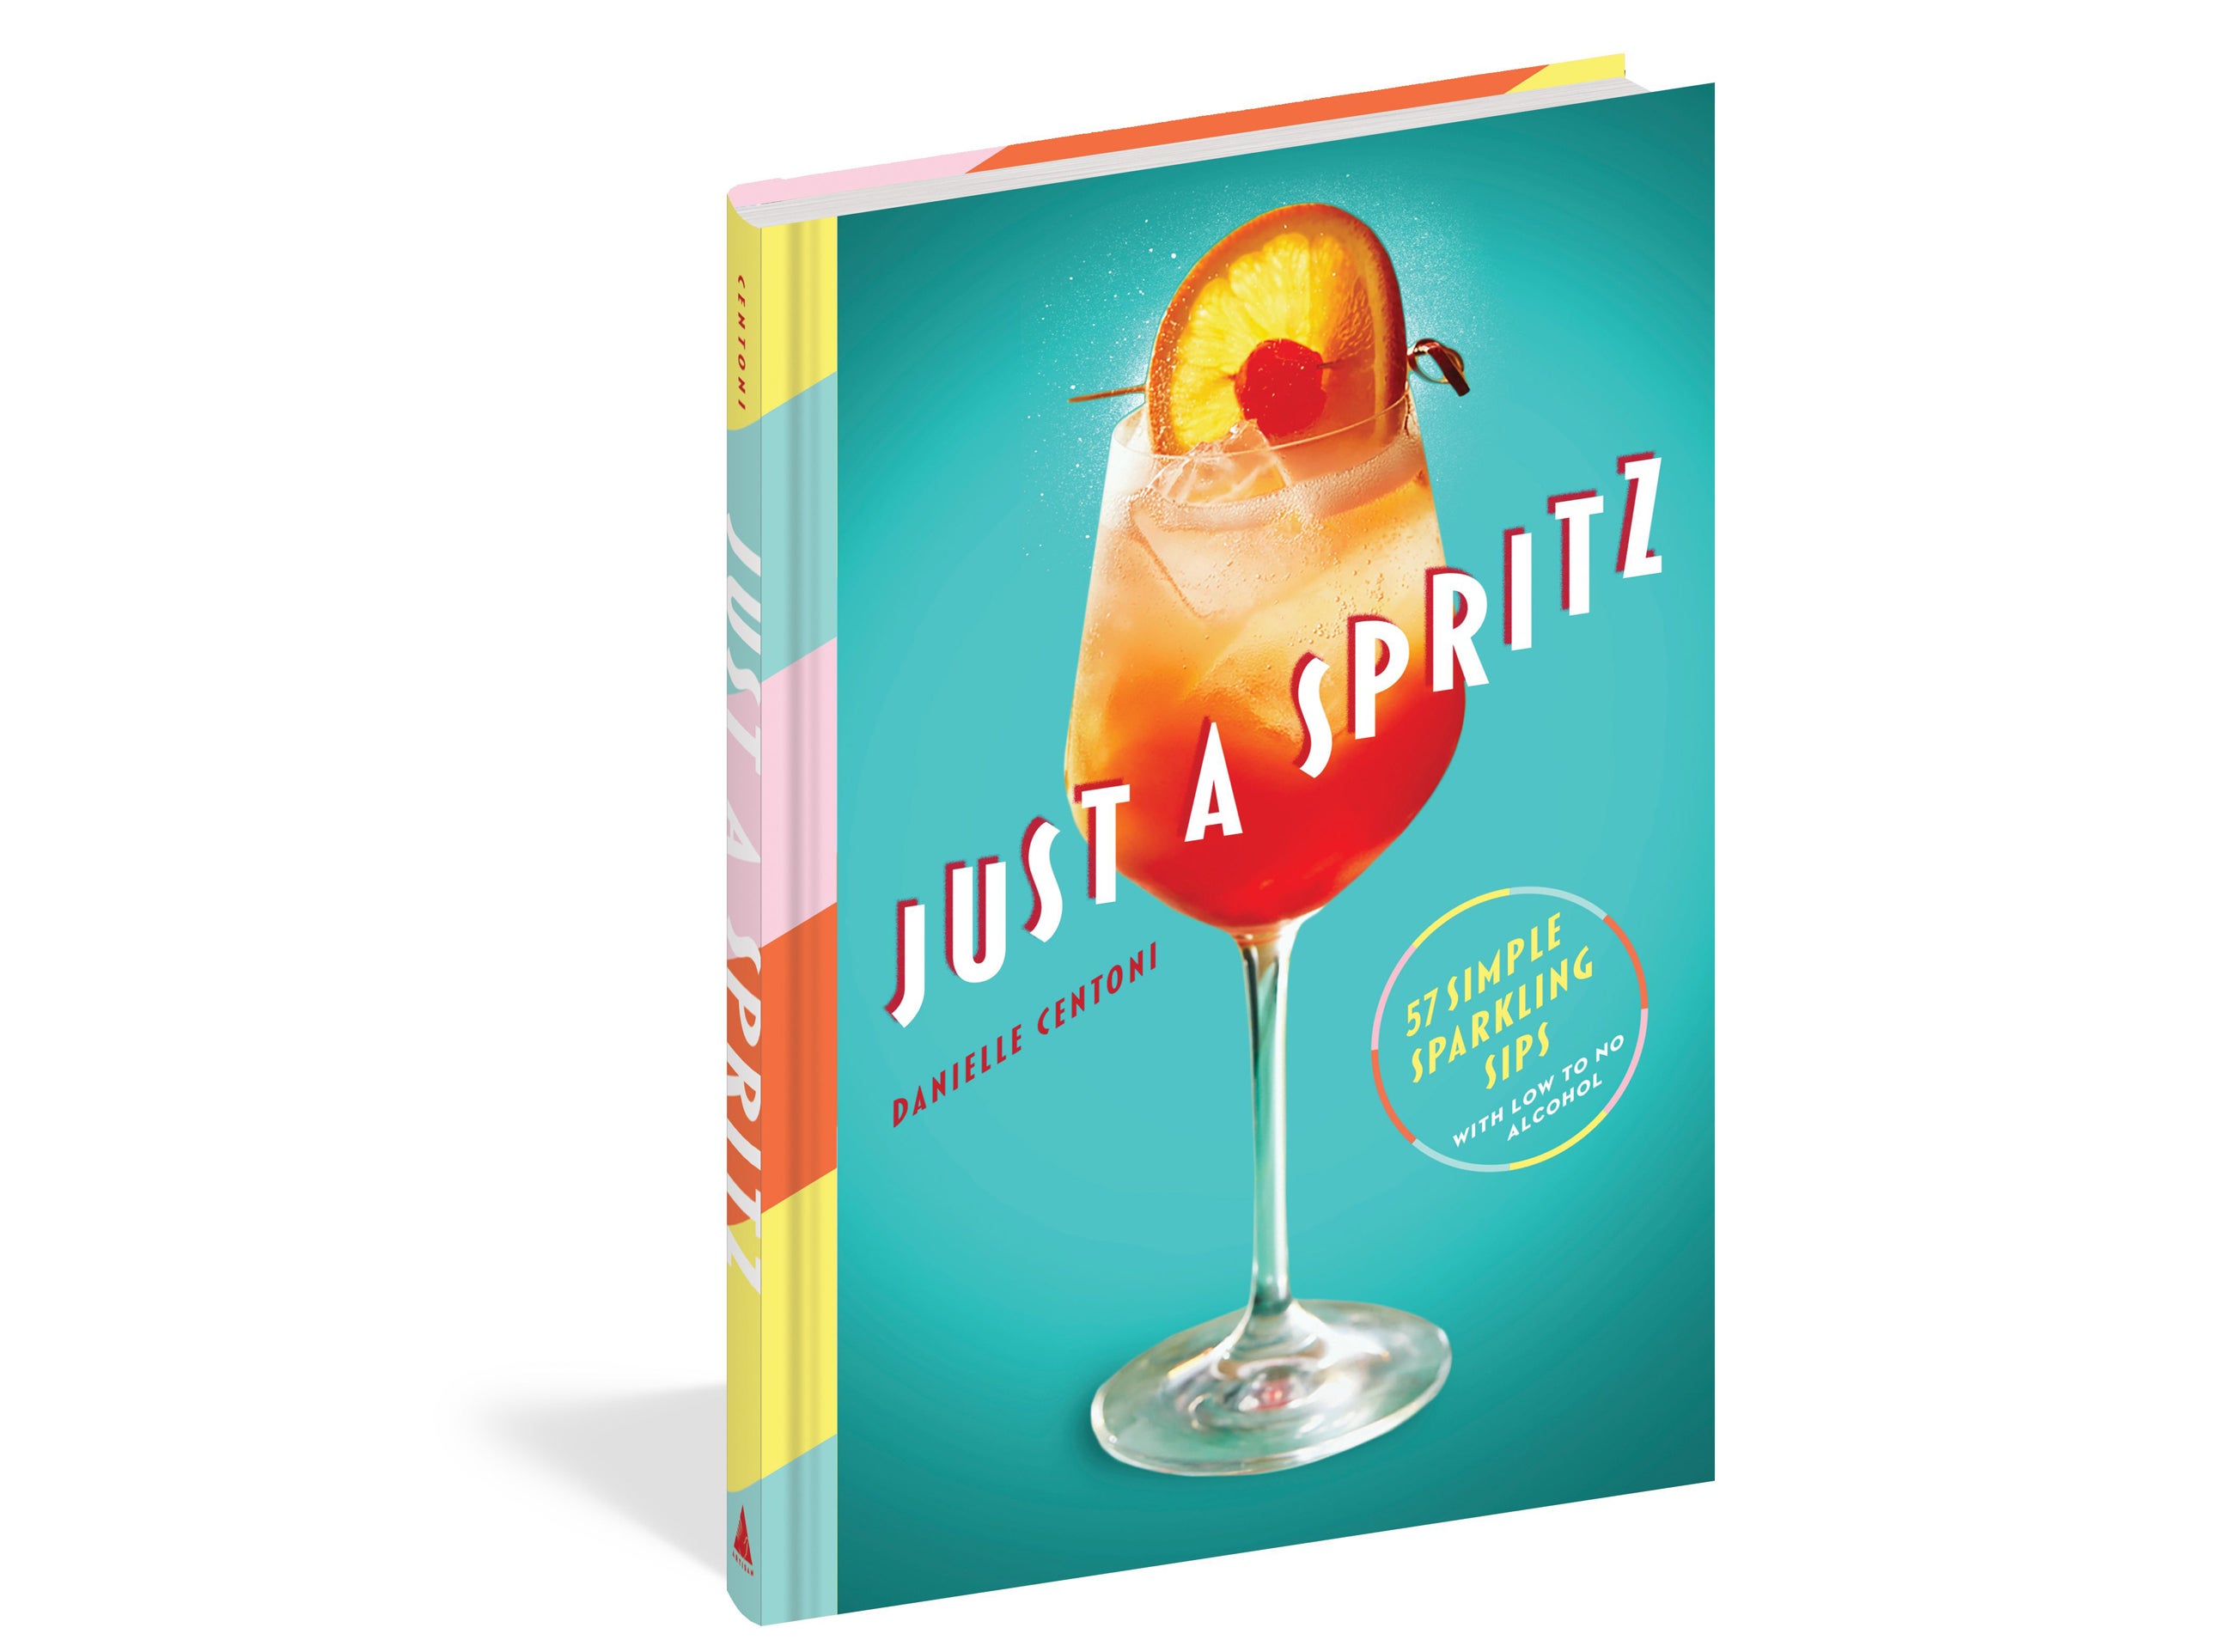 Danielle Centoni’s new book promises to help you achieve ‘spritz perfection’